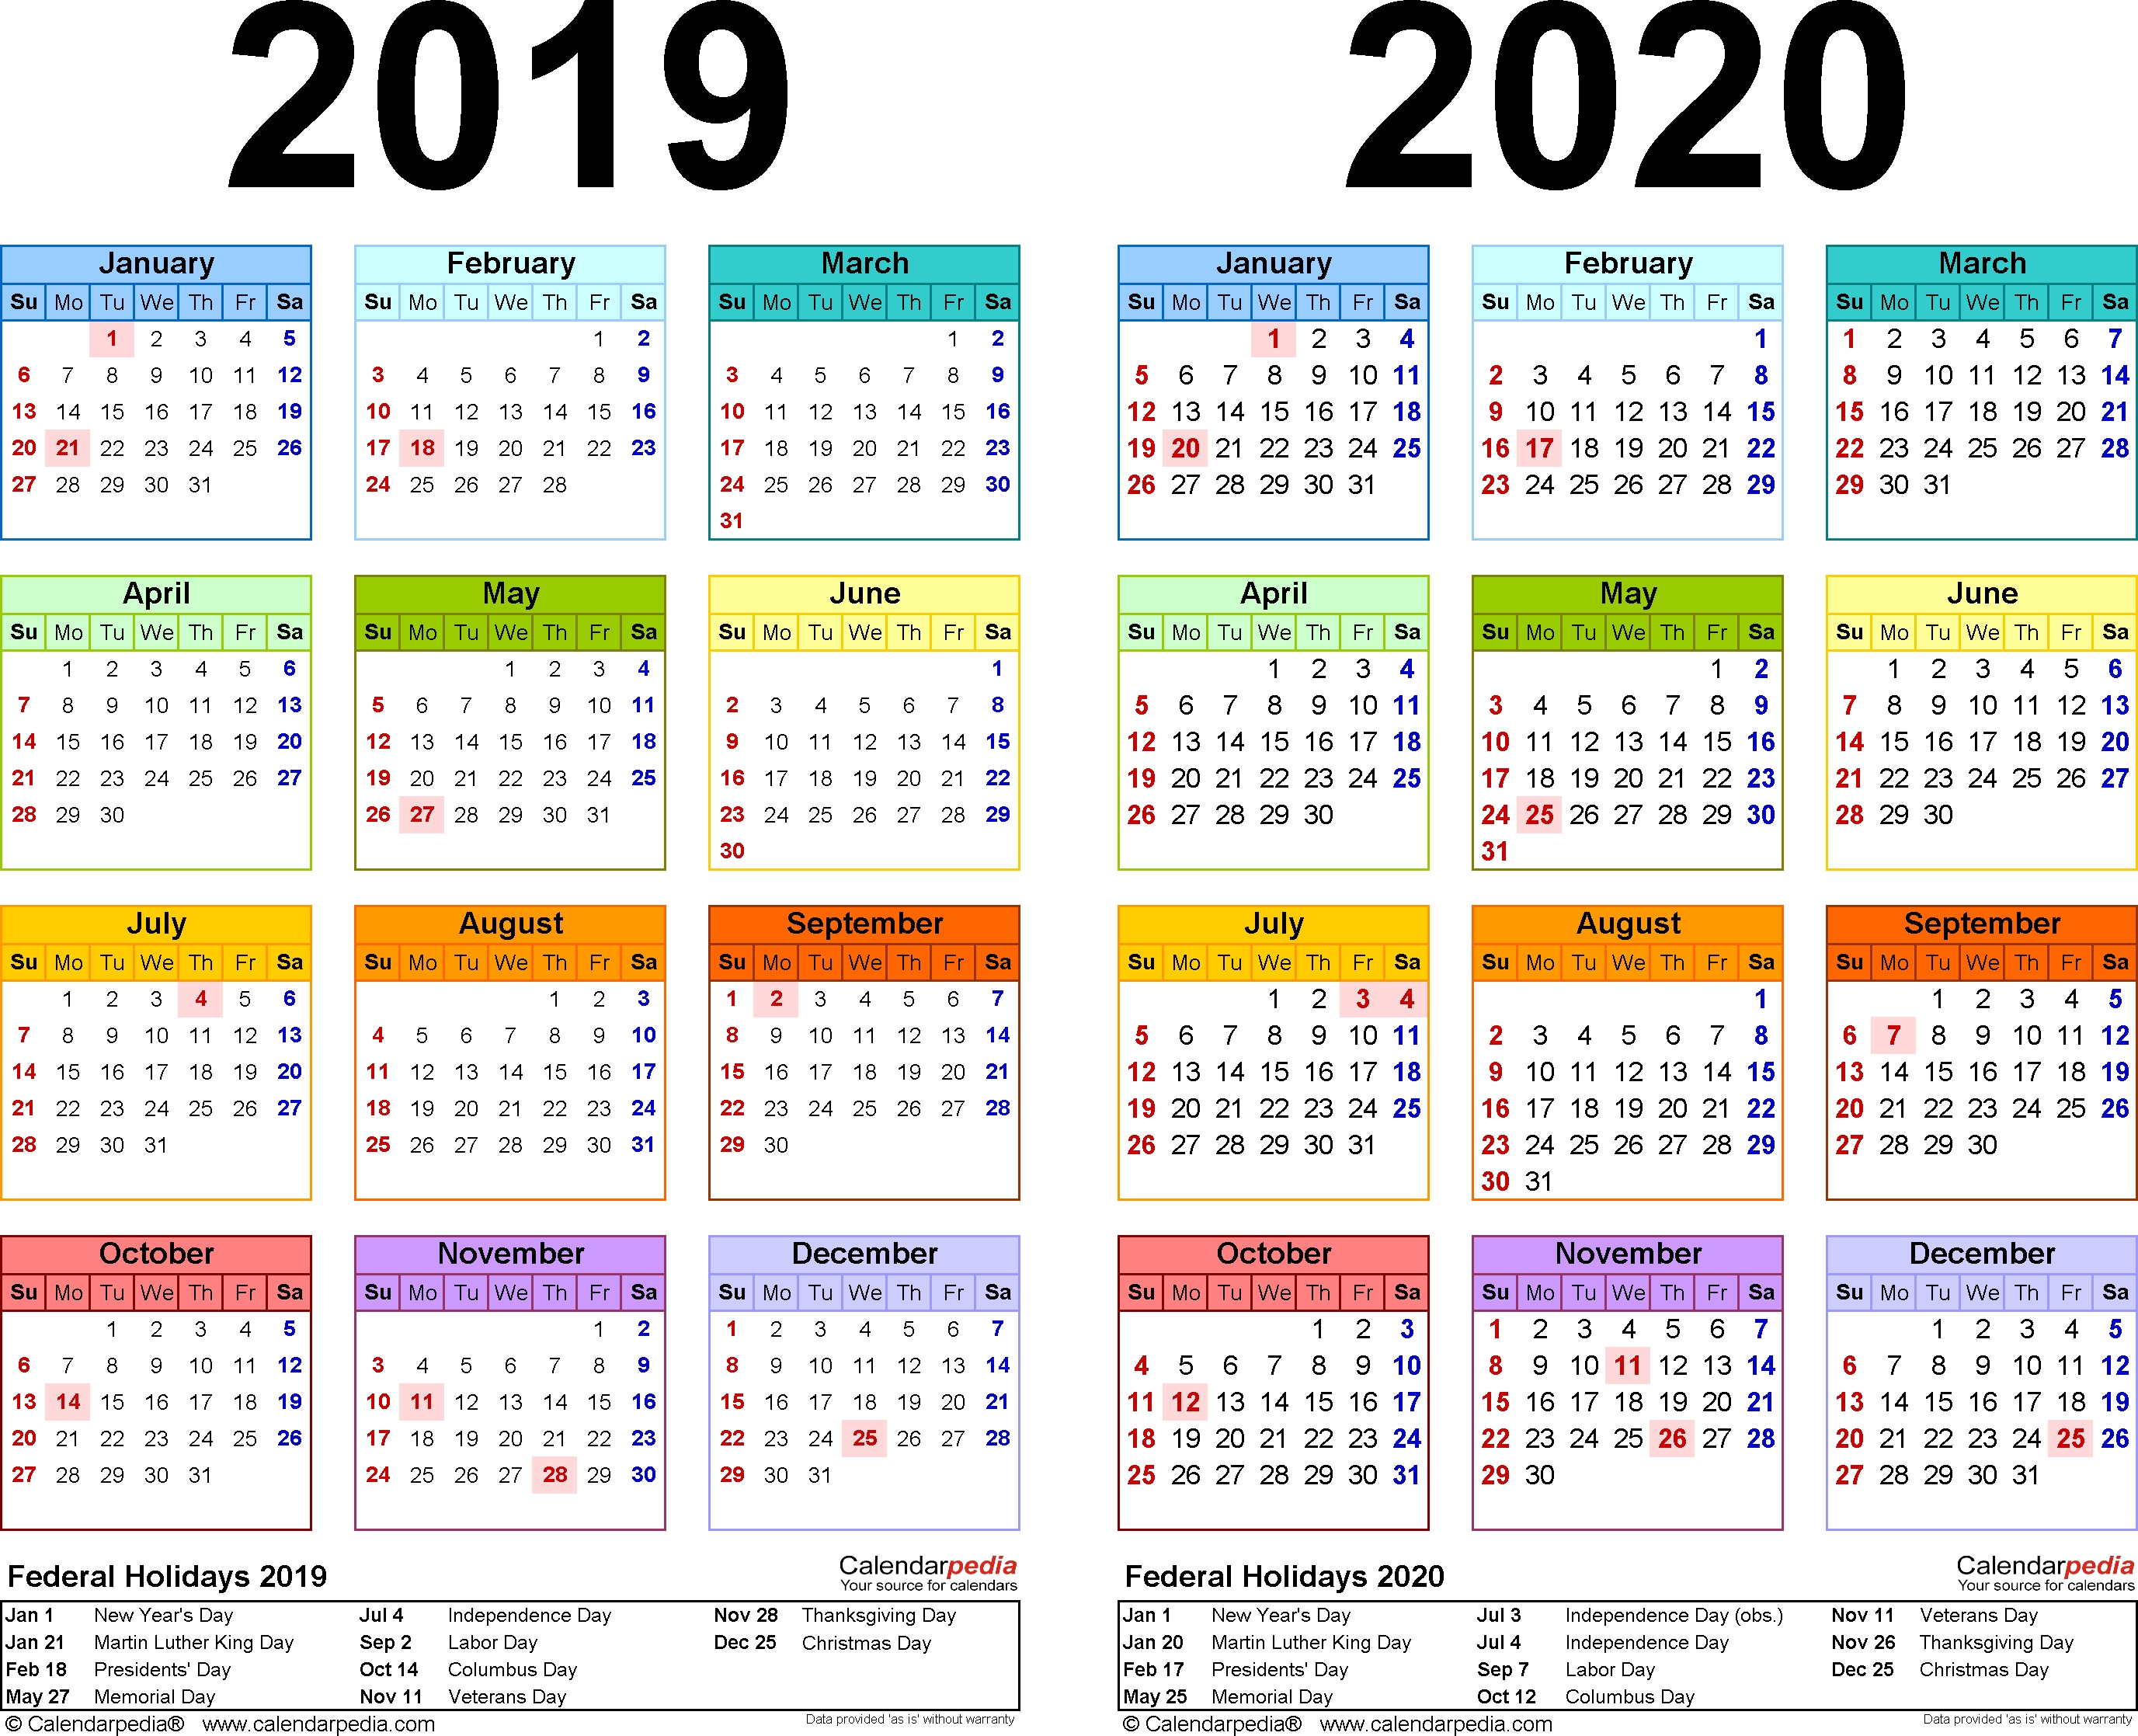 2019 2020 School Year Calendar With Holiday Us - Google-Calendar 2020 Us Holidays